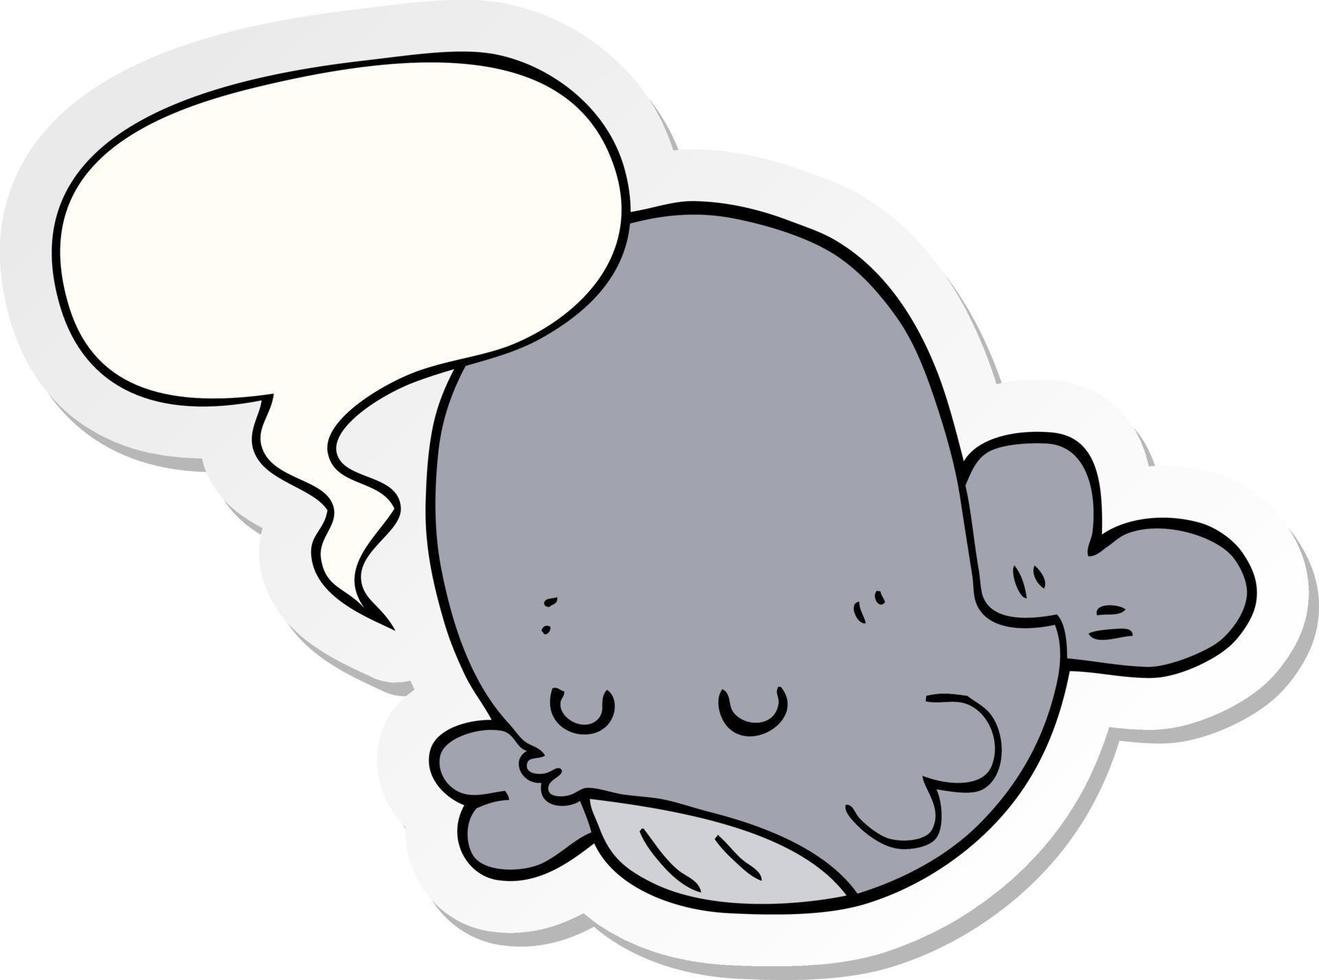 cartoon whale and speech bubble sticker vector